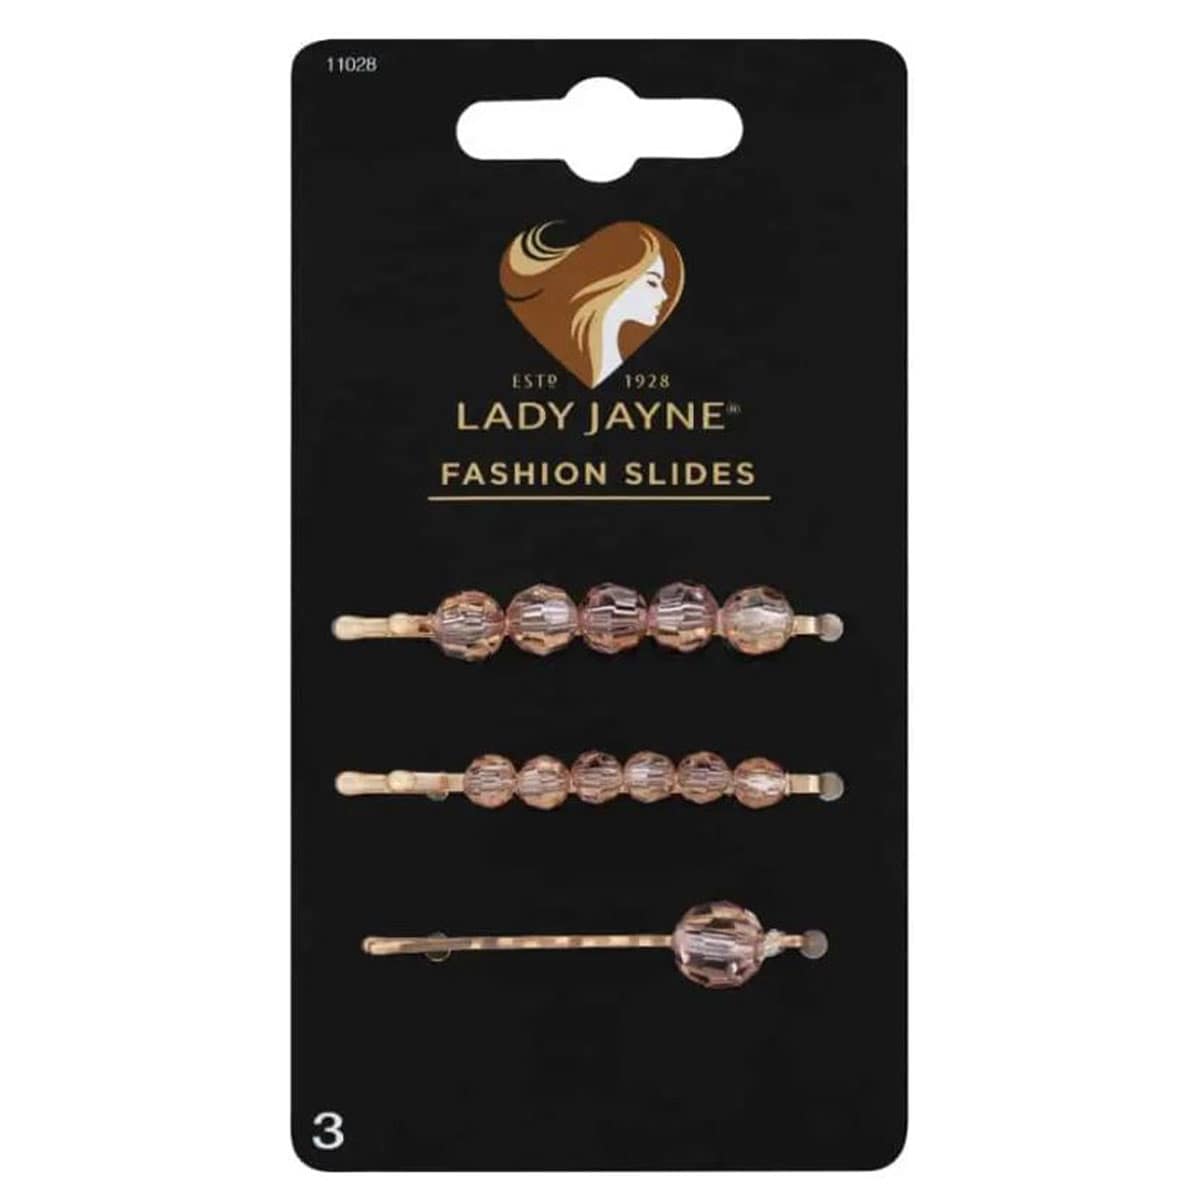 Lady Jayne Pro Fashion Slides 3 Pack (Style selected at random)